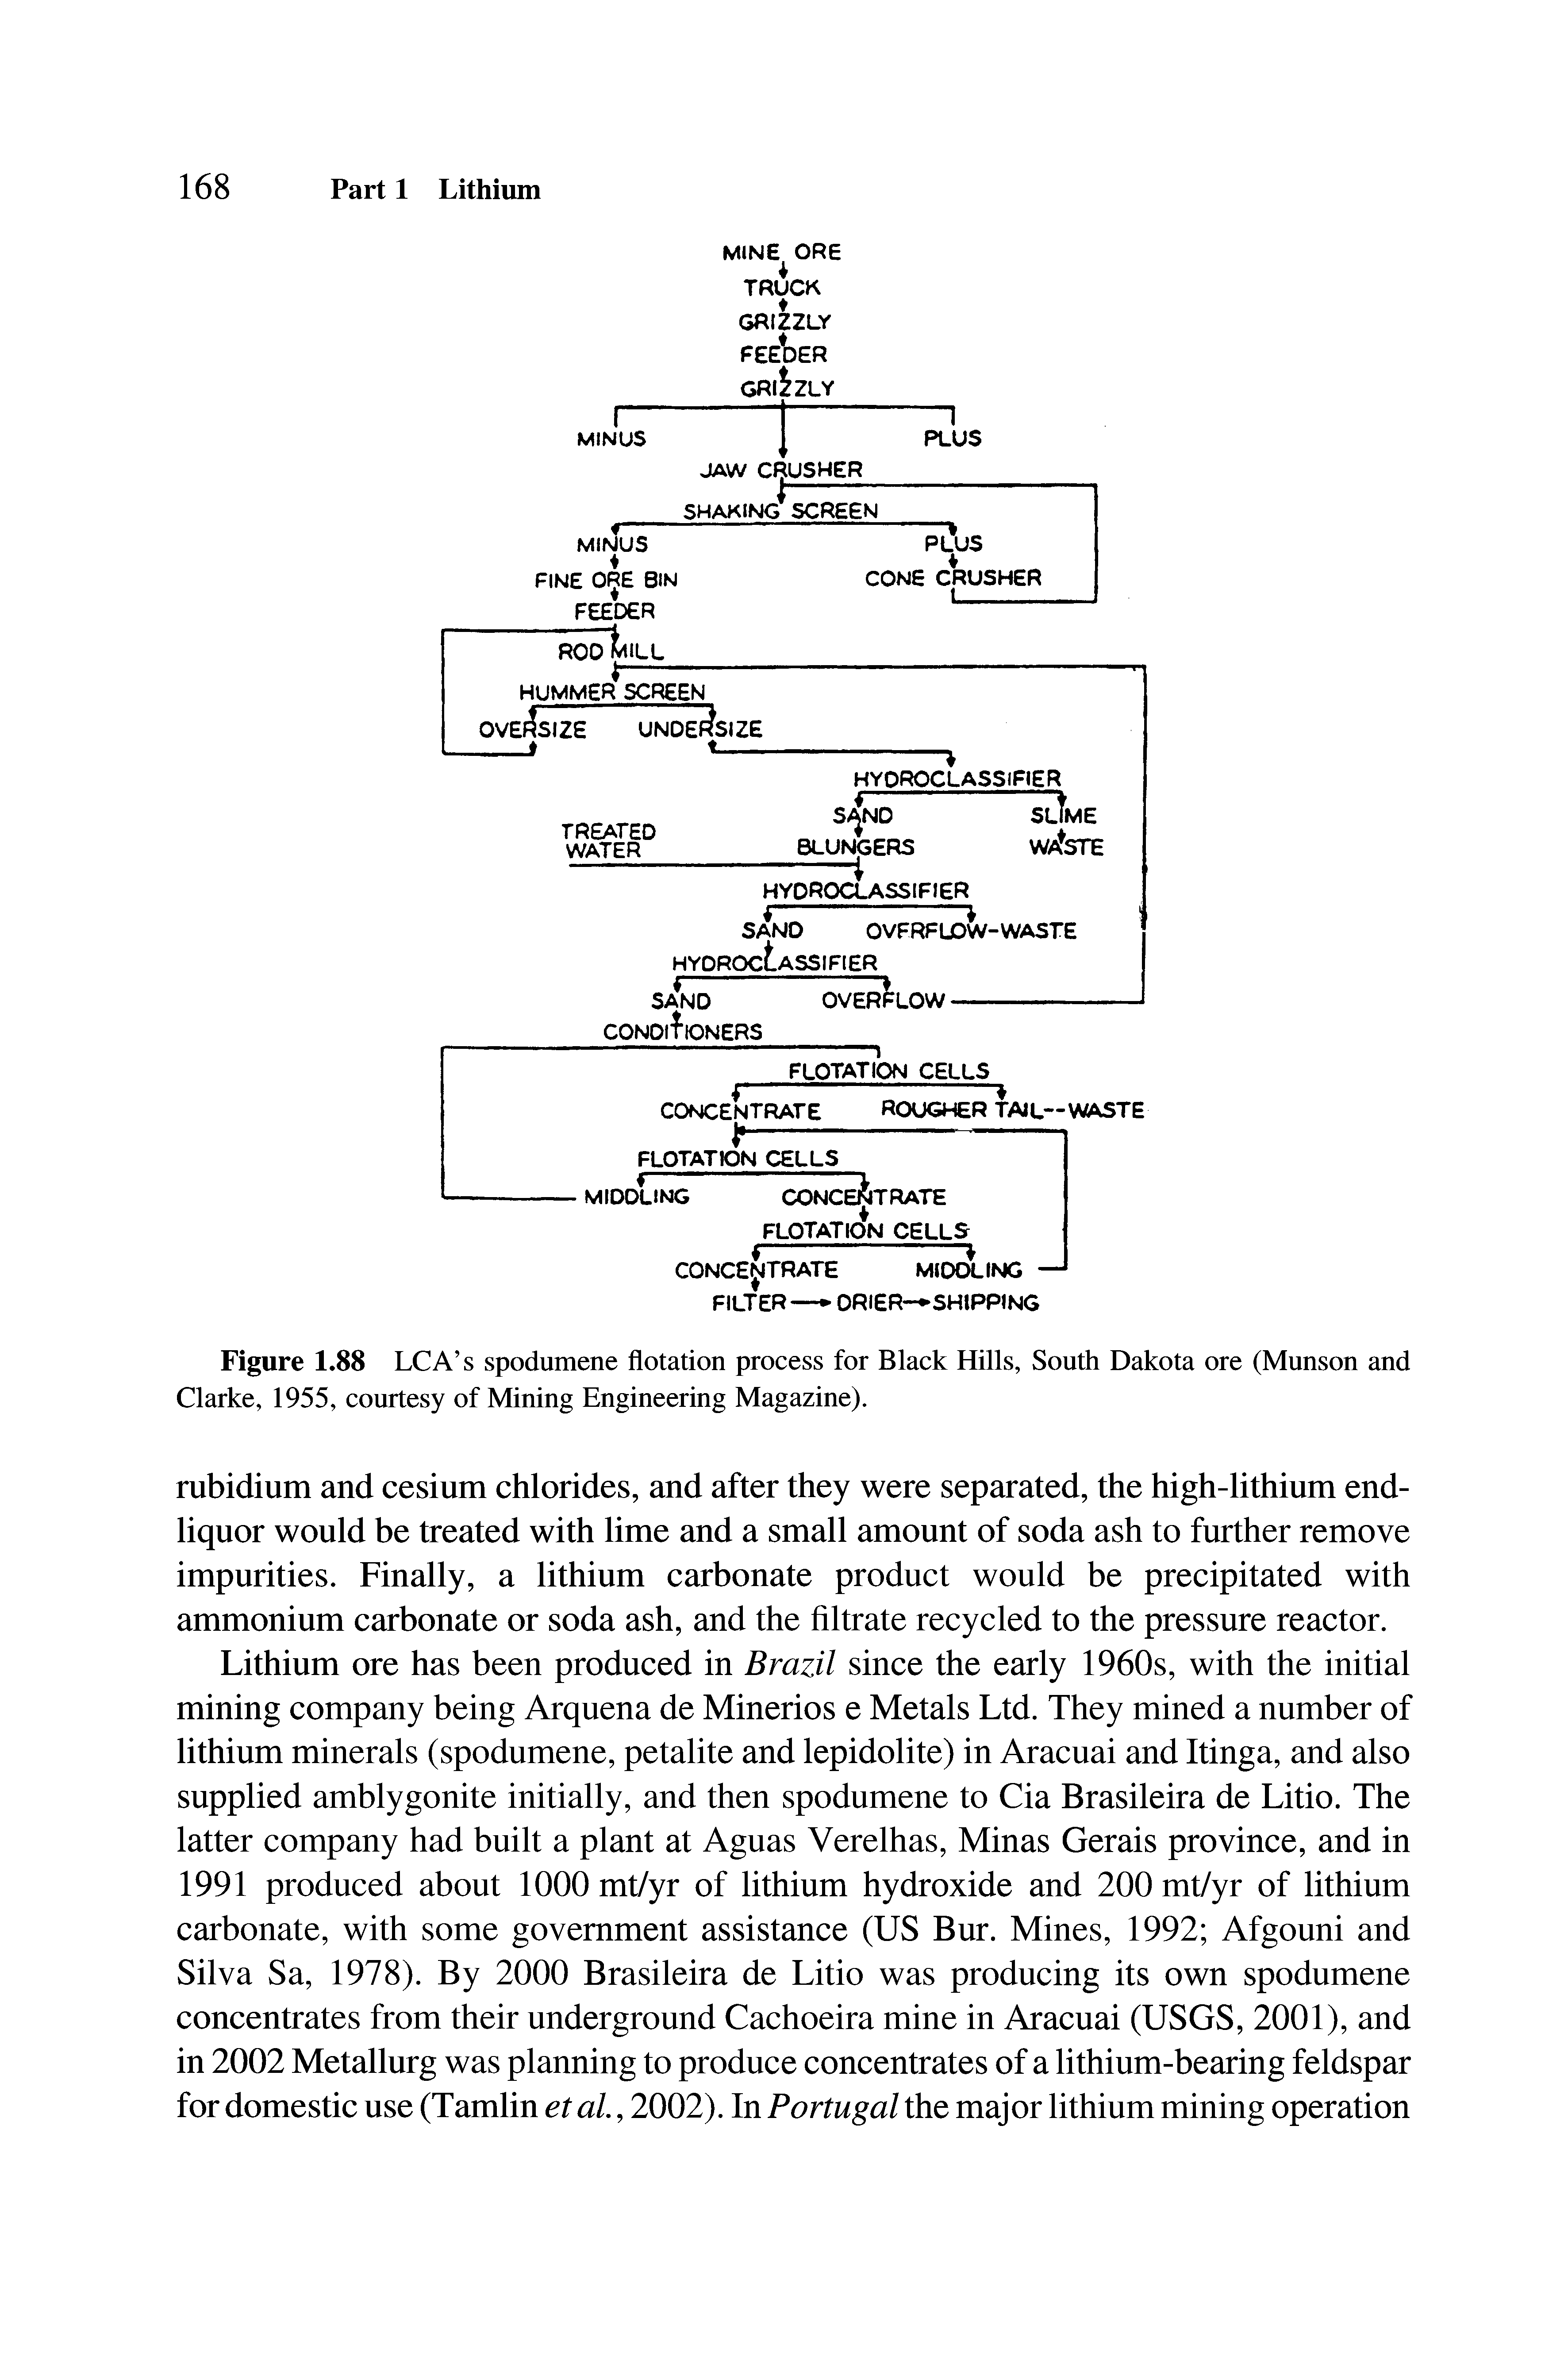 Figure 1.88 LCA s spodumene flotation process for Black Hills, South Dakota ore (Munson and Clarke, 1955, courtesy of Mining Engineering Magazine).